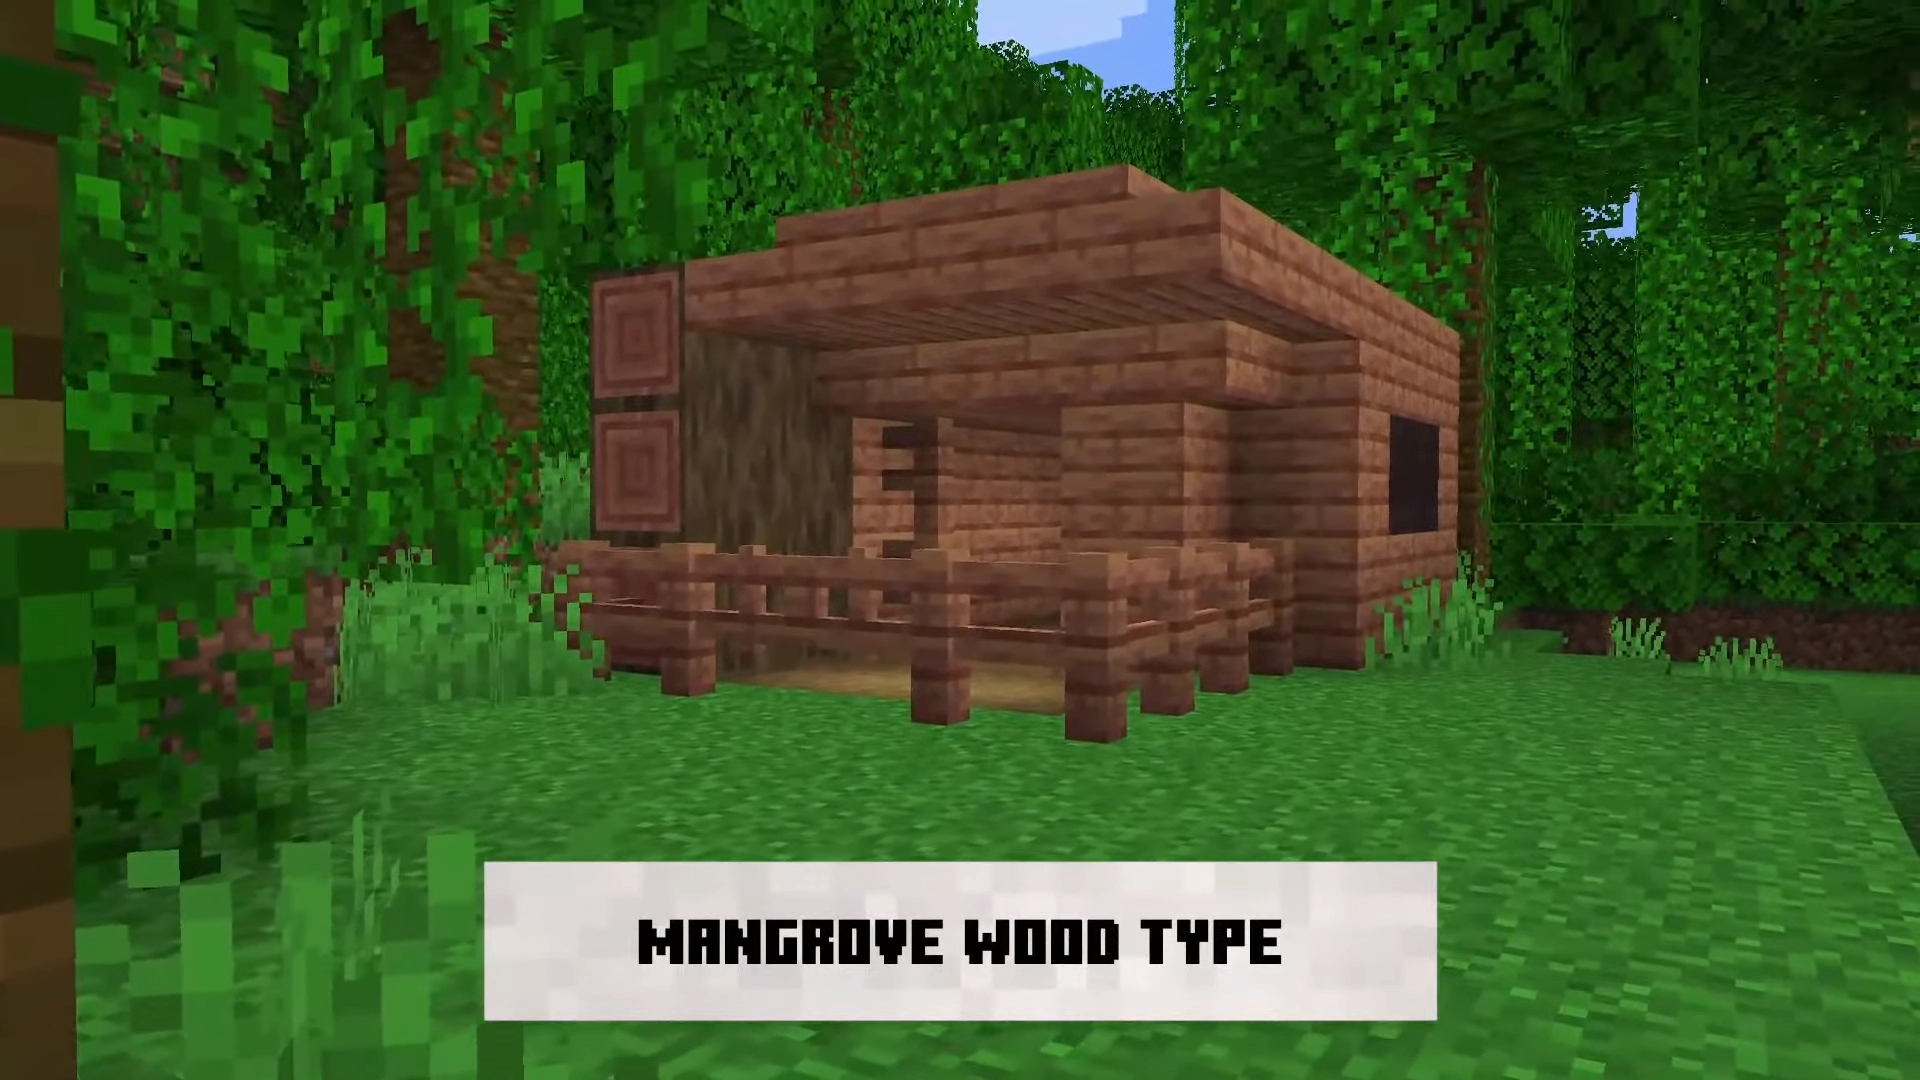 Mangrove Wood